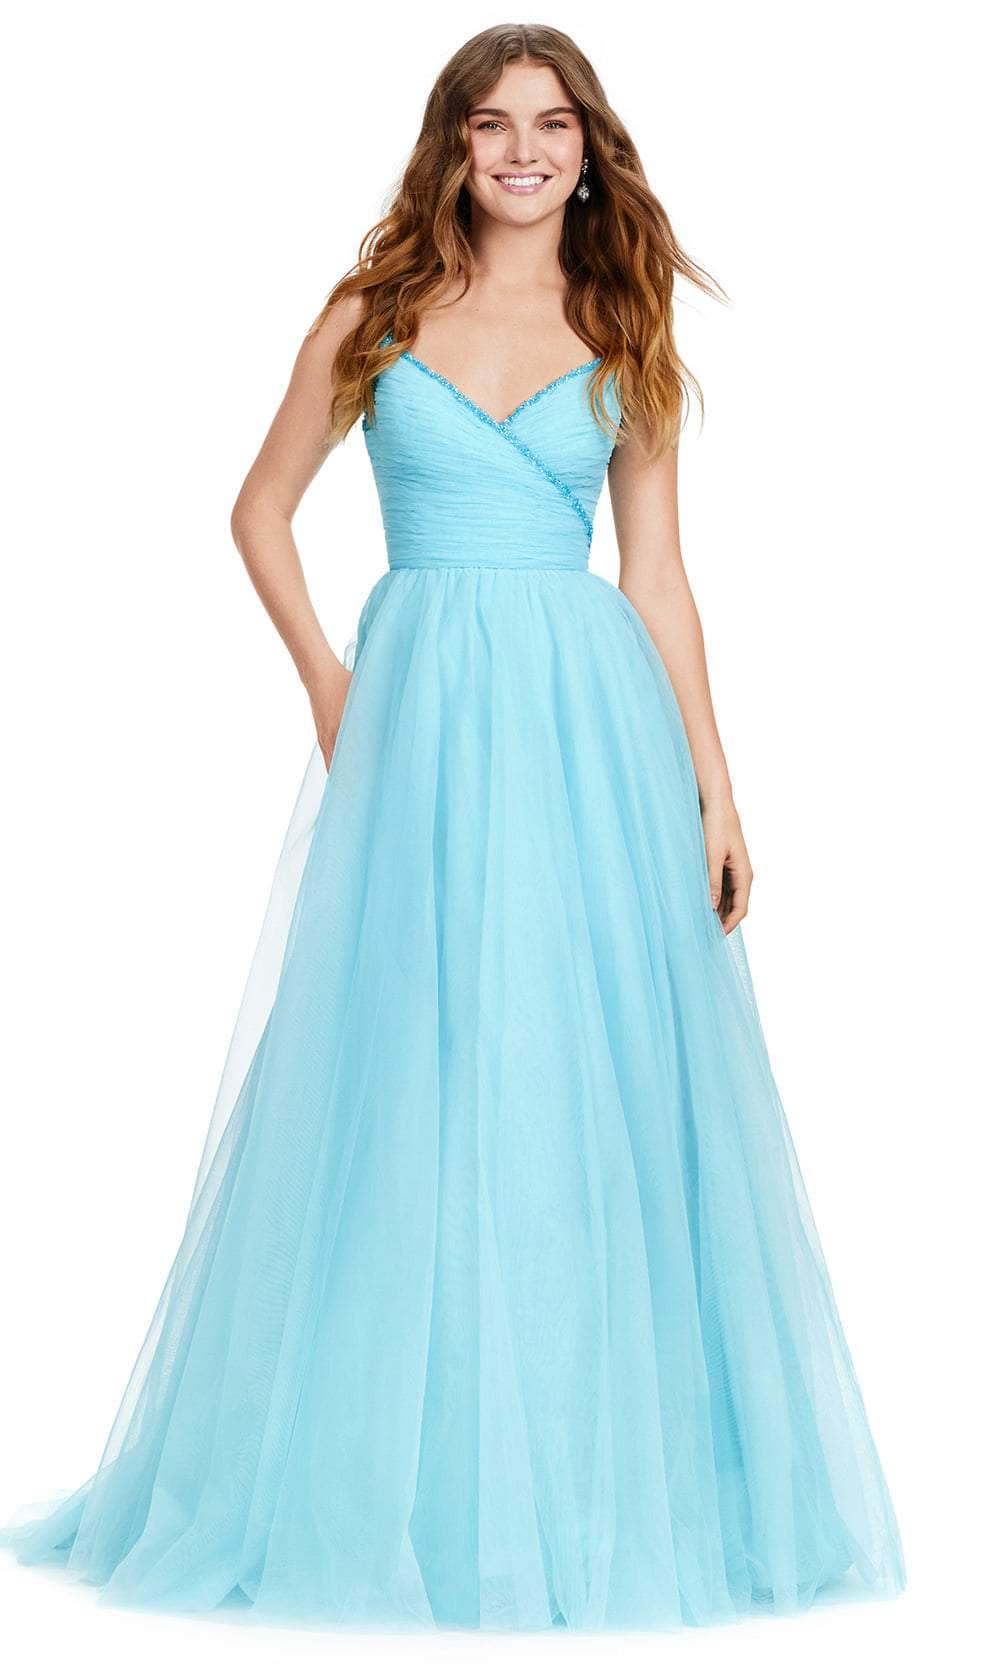 Ashley Lauren 11461 - Beaded Trim Prom Dress Prom Dresses